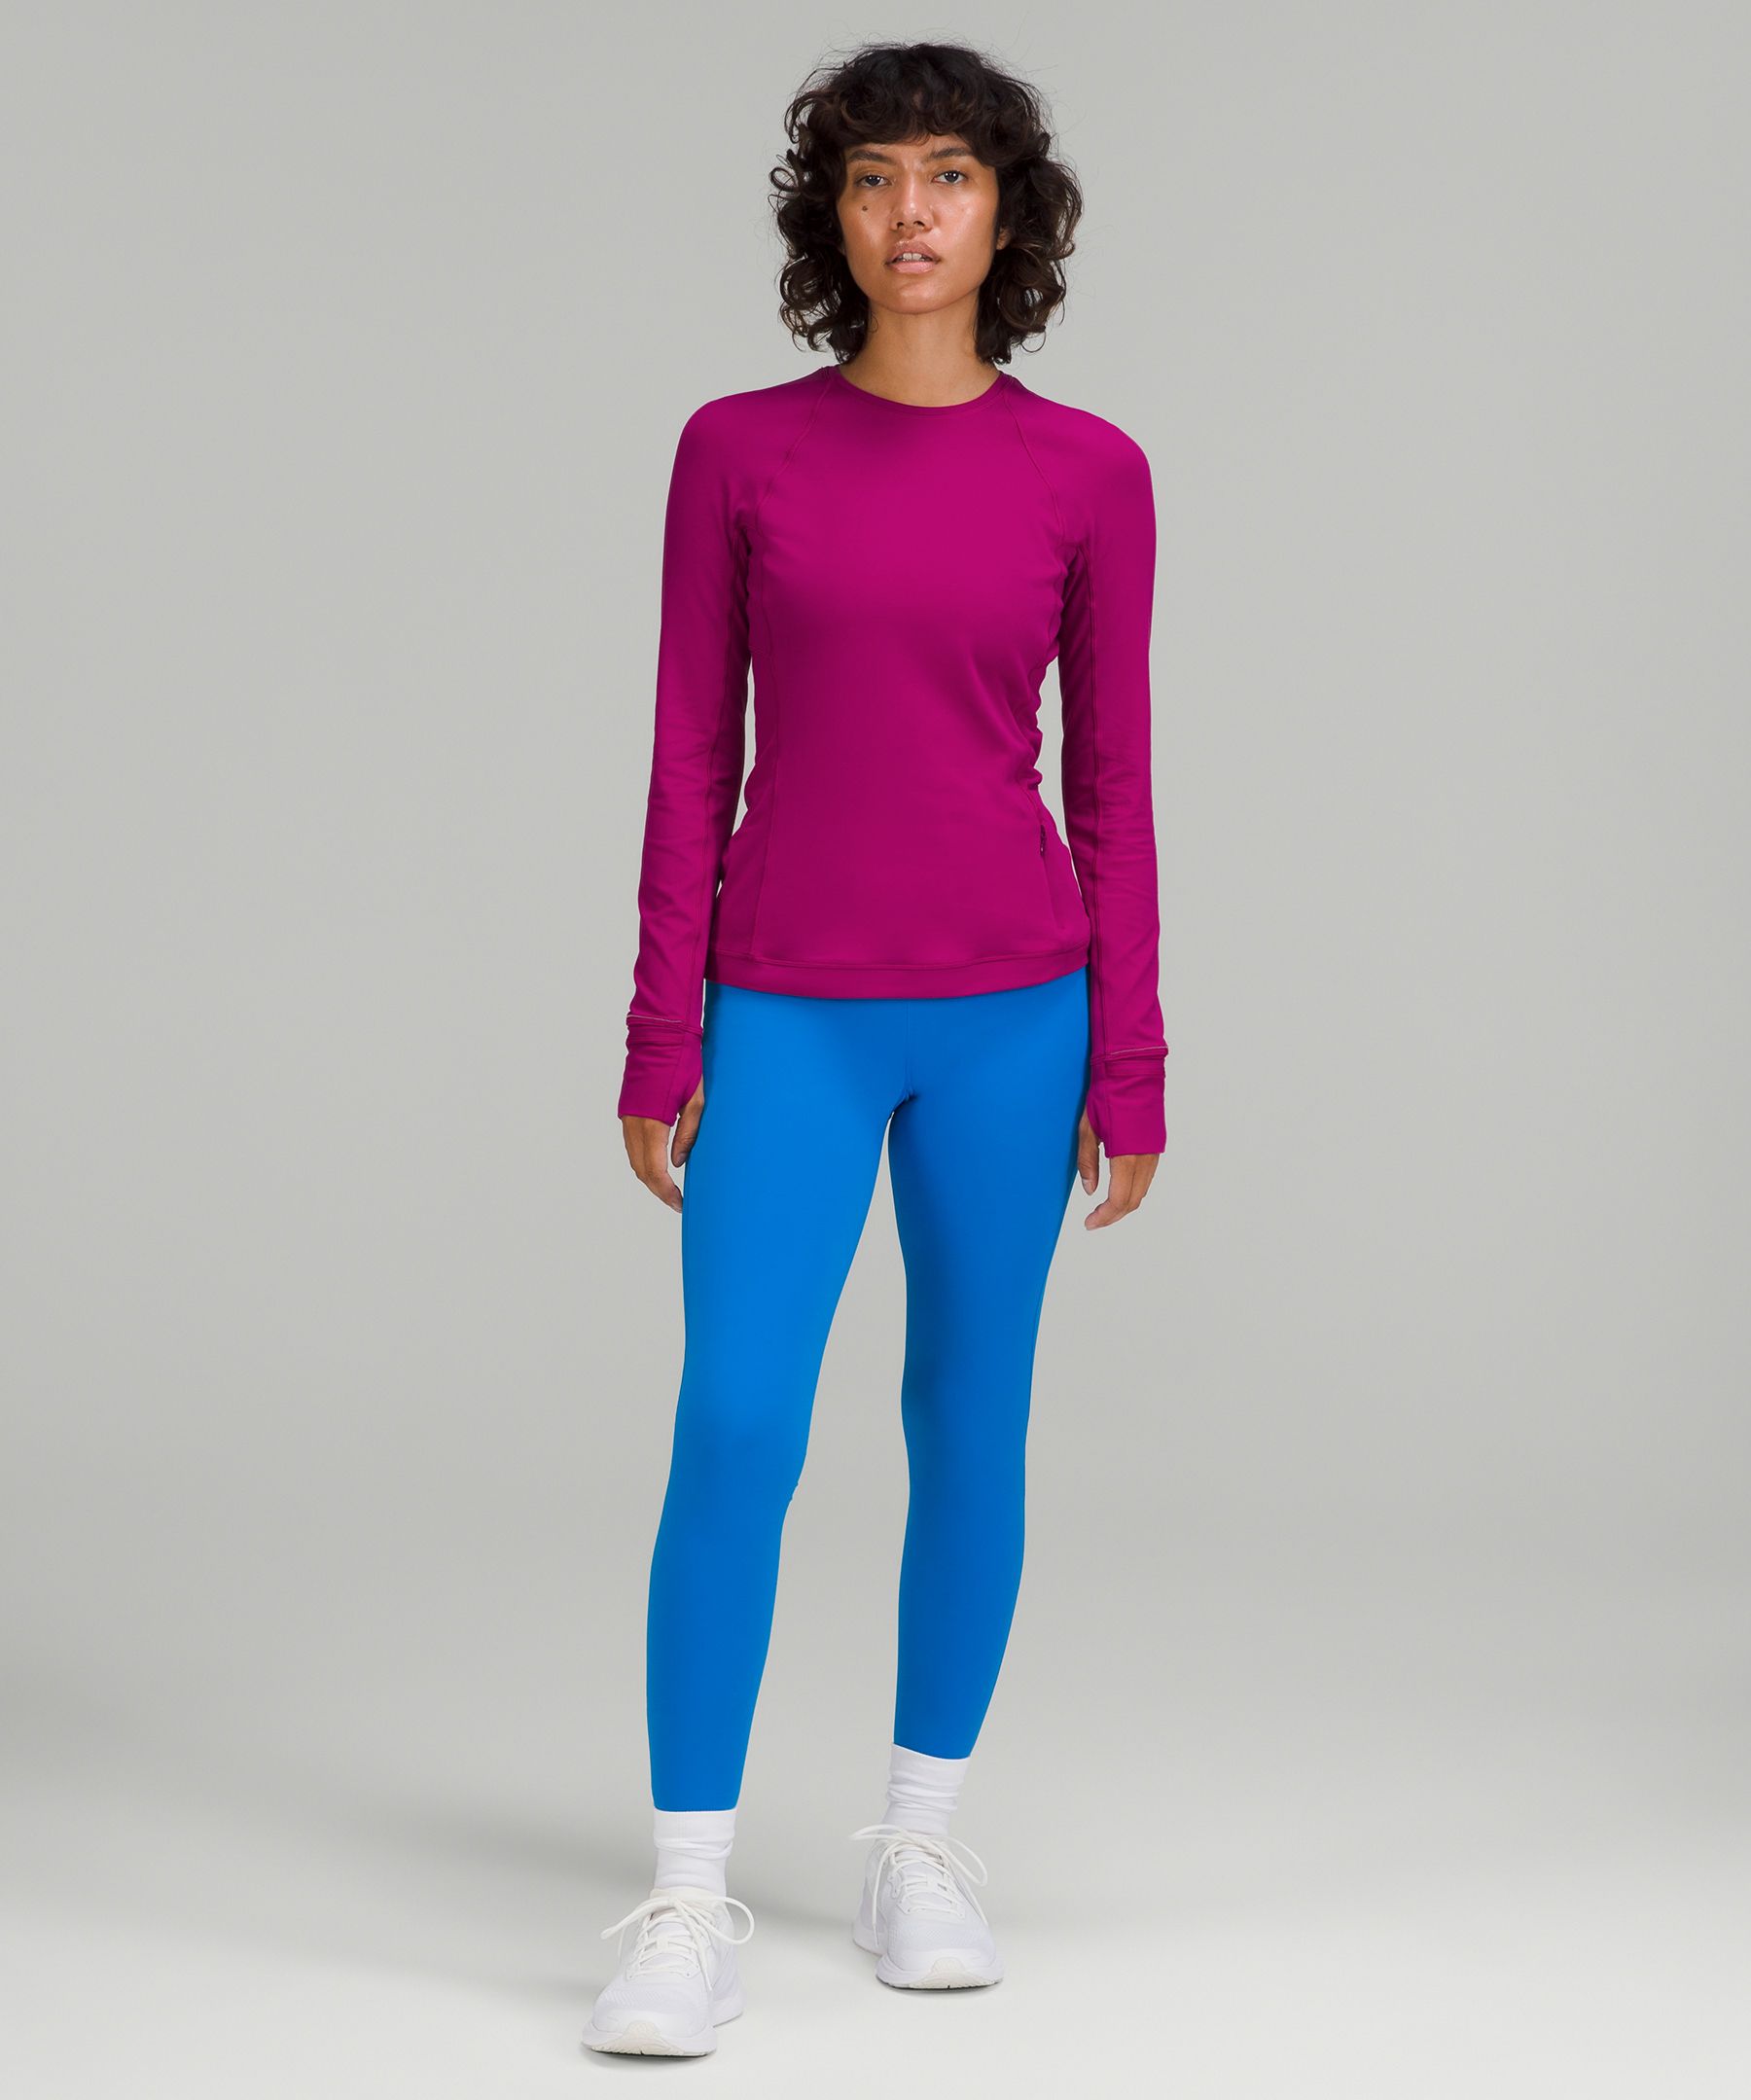 Lululemon It's Rulu Run Long Sleeve NWOT Pink Size 8 - $60 (31% Off Retail)  - From Nicole